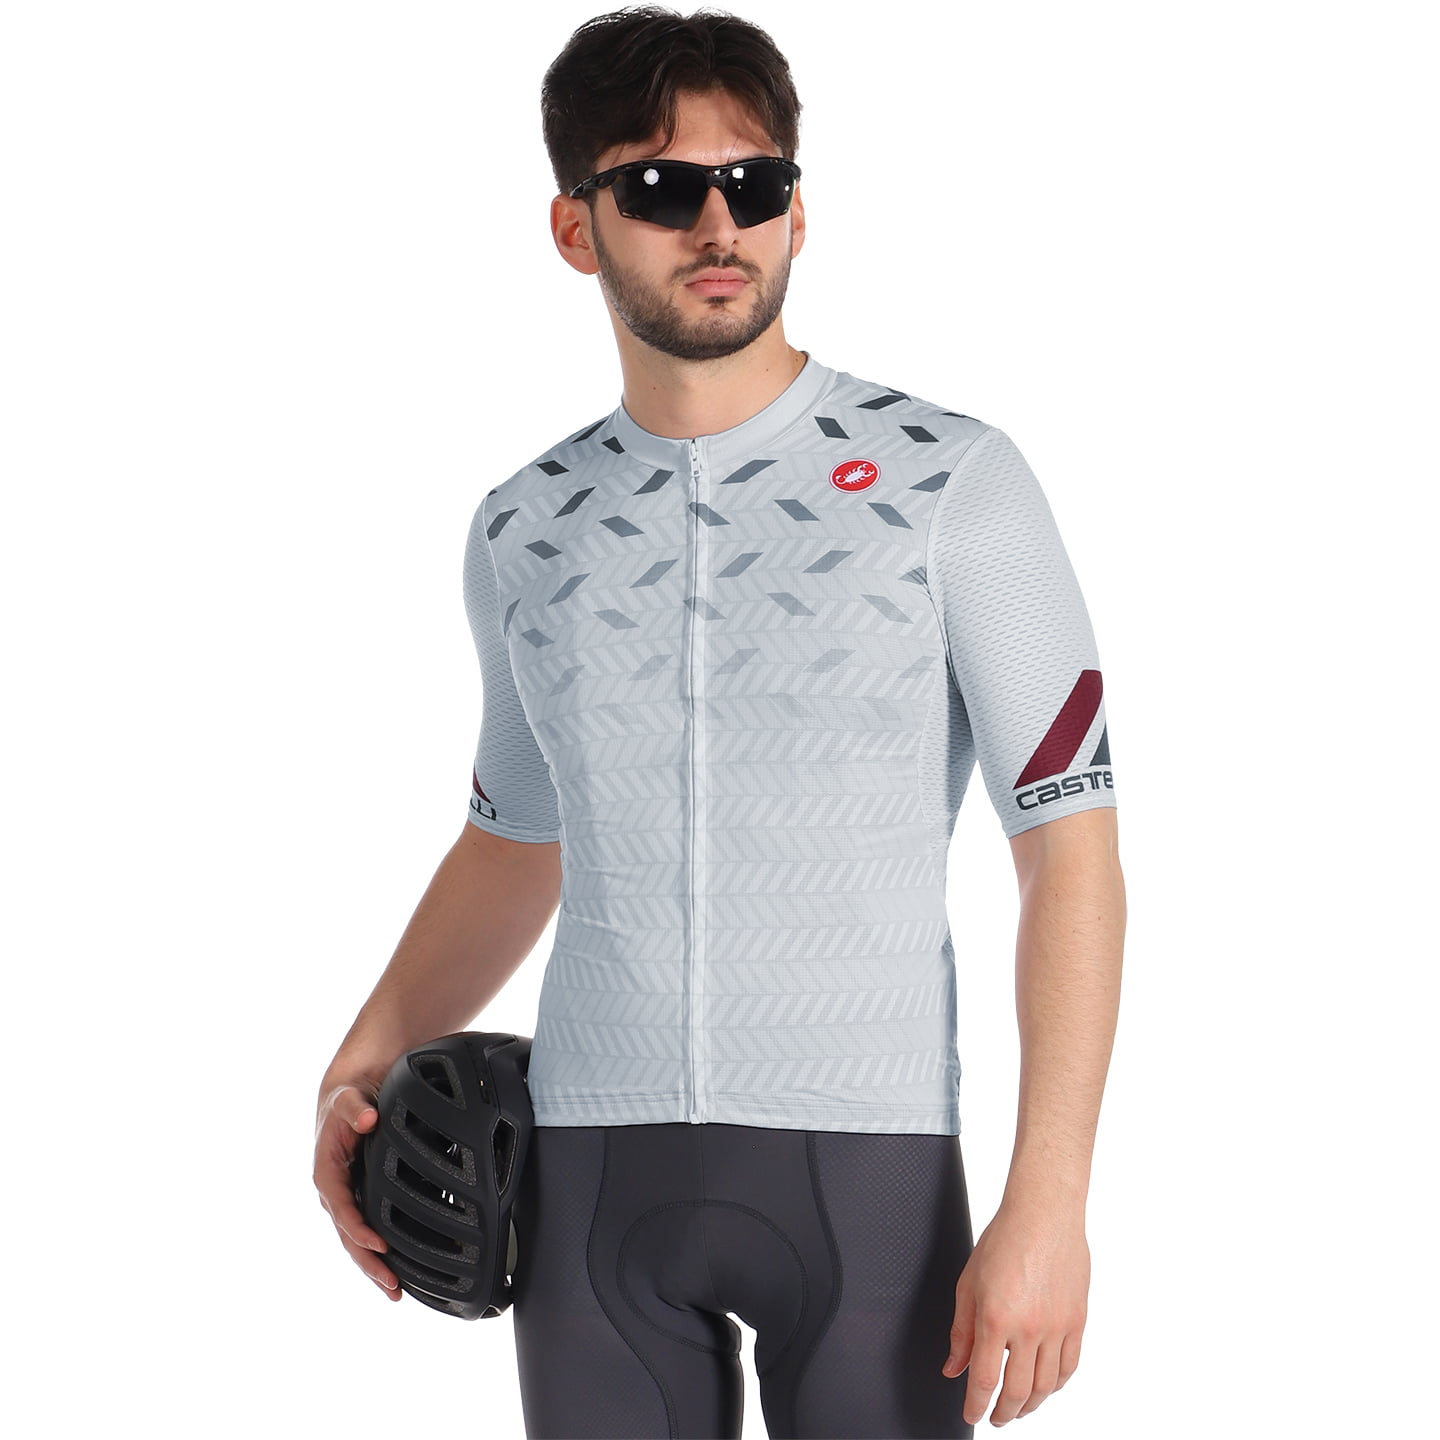 CASTELLI Avanti 2 Short Sleeve Jersey Short Sleeve Jersey, for men, size XL, Cycling jersey, Cycle clothing